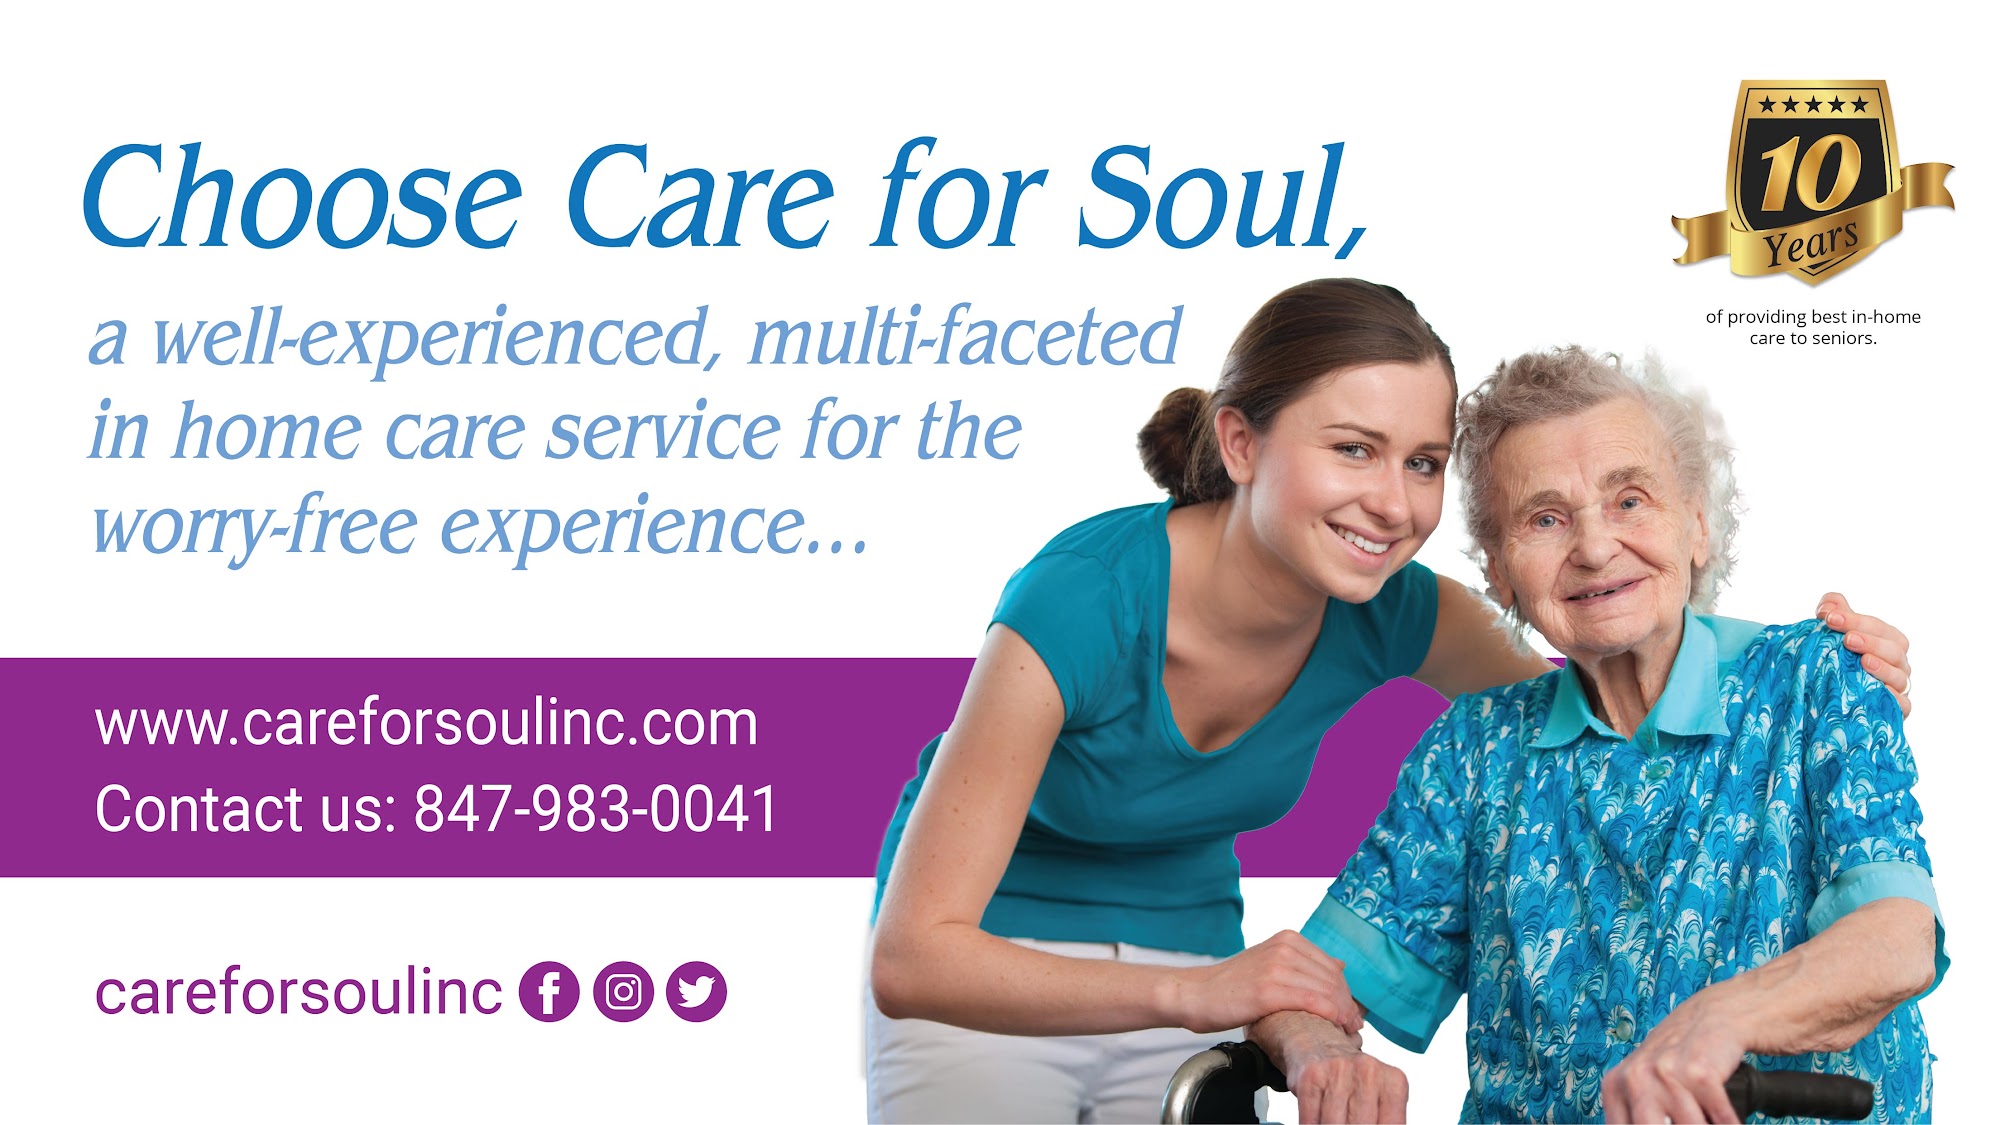 Care for soul Inc I Home Care Service I Light Housekeeping I Companionship I Personal Care